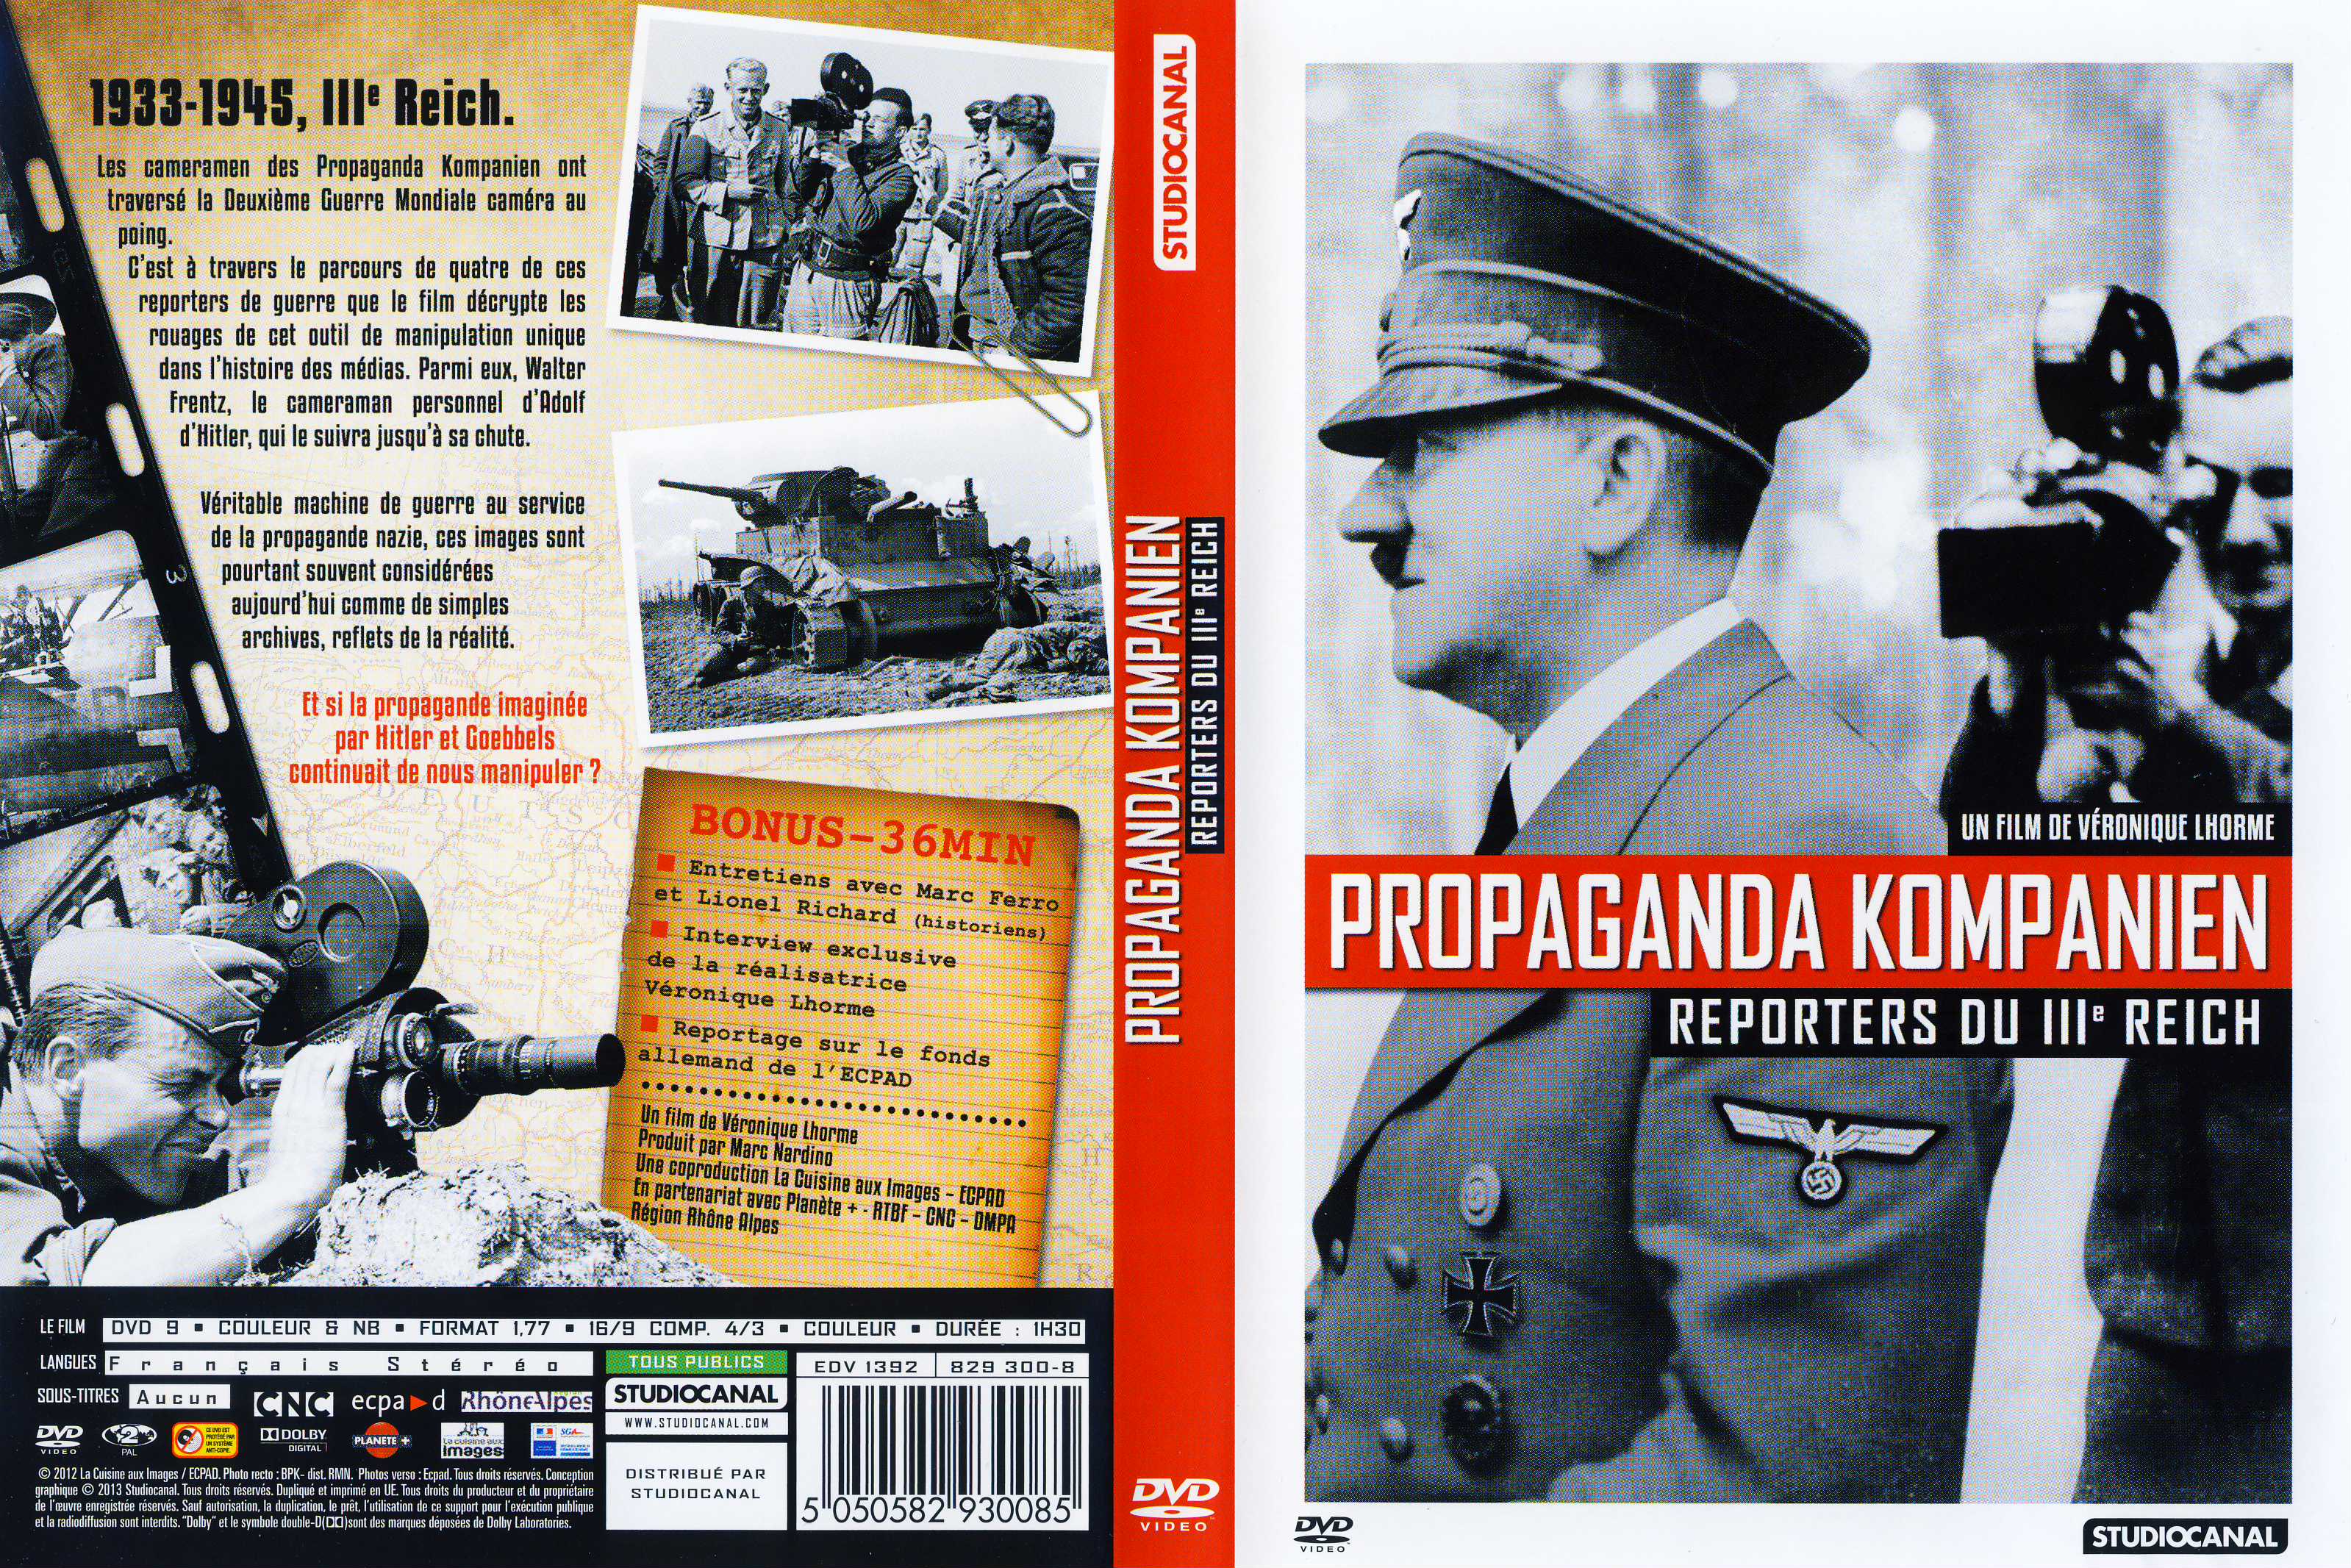 Jaquette DVD Propaganda kompanien Reporters du 3me reich